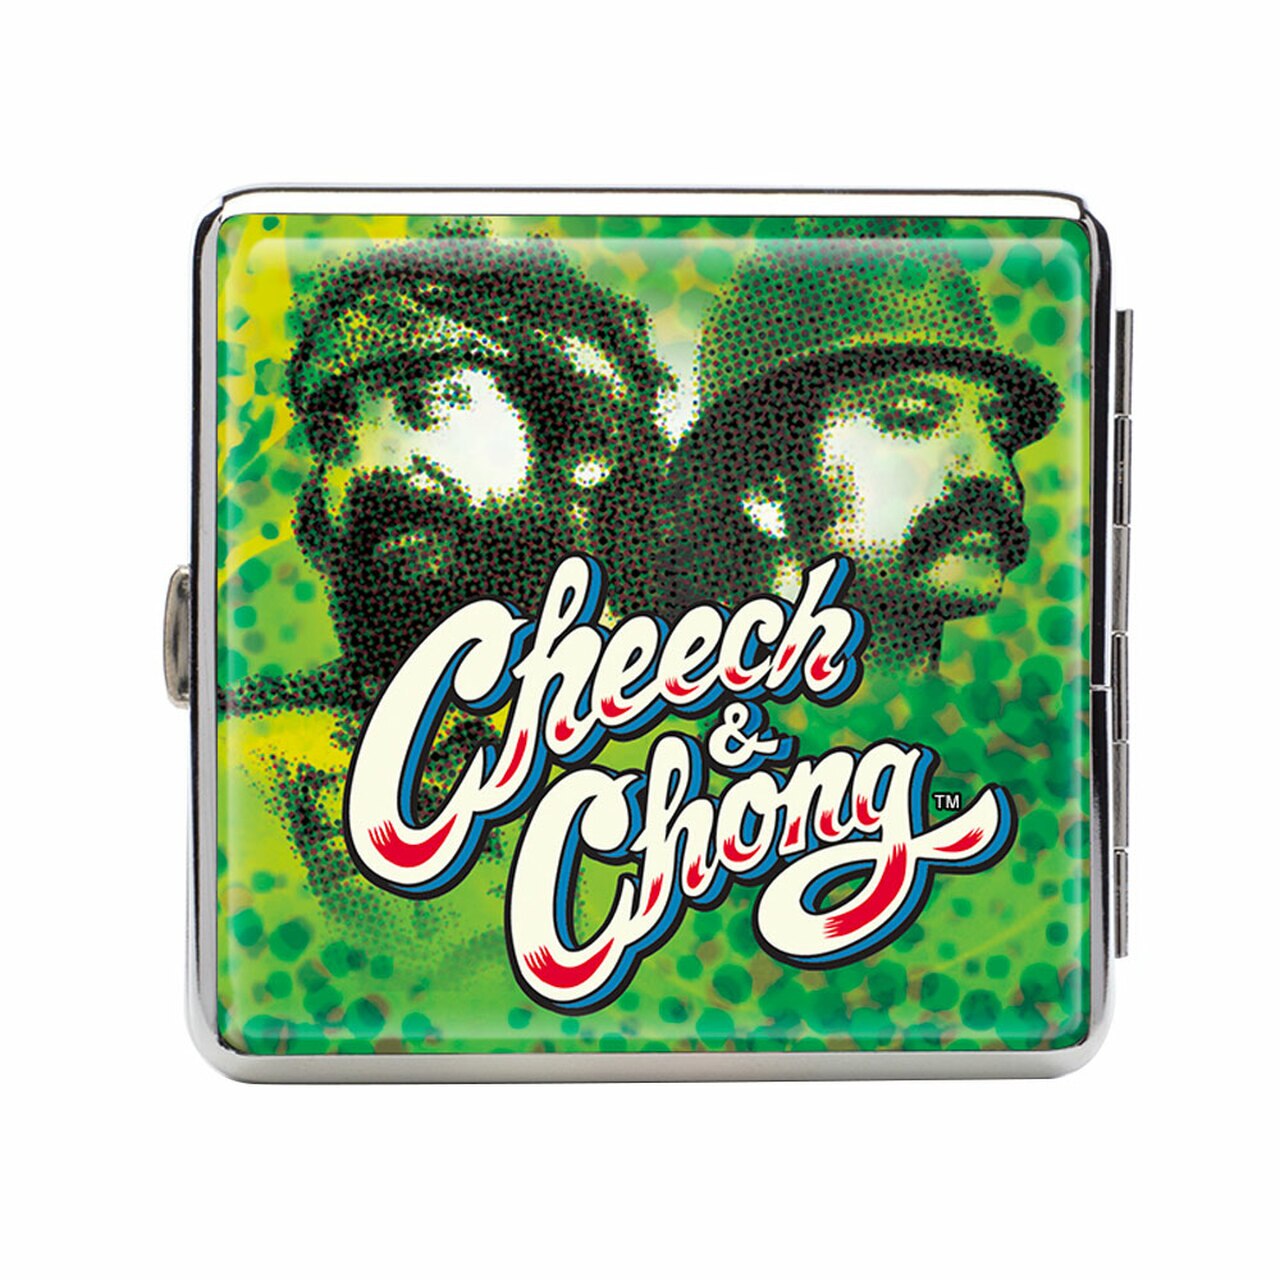 Green coloured cheech and chong cigarette case